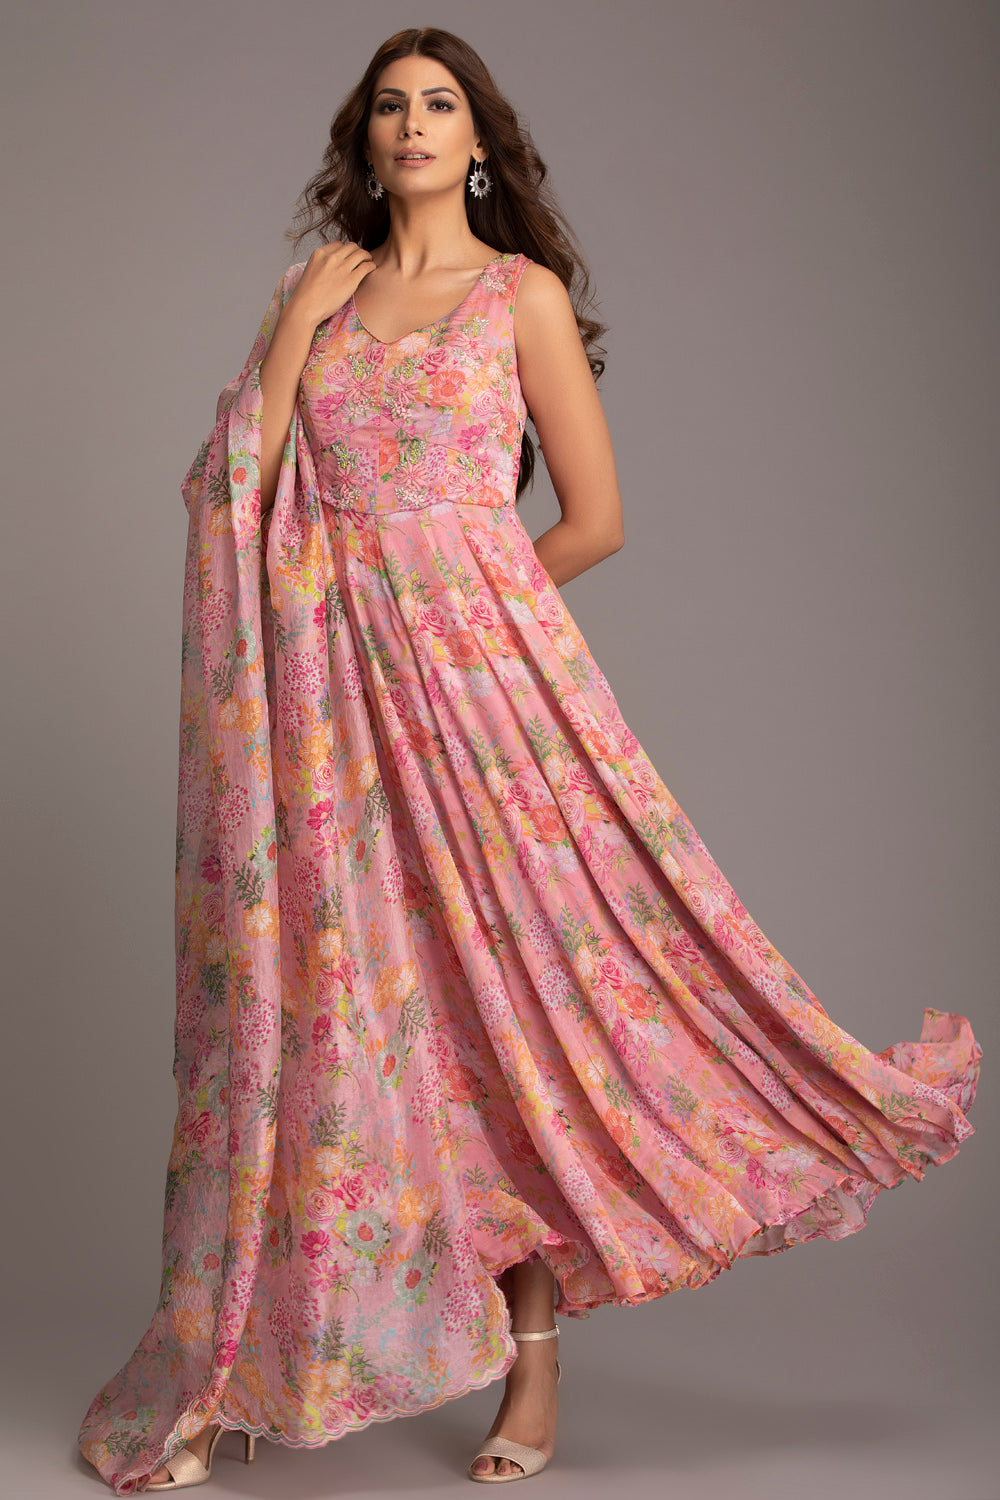 Peach floral long dress